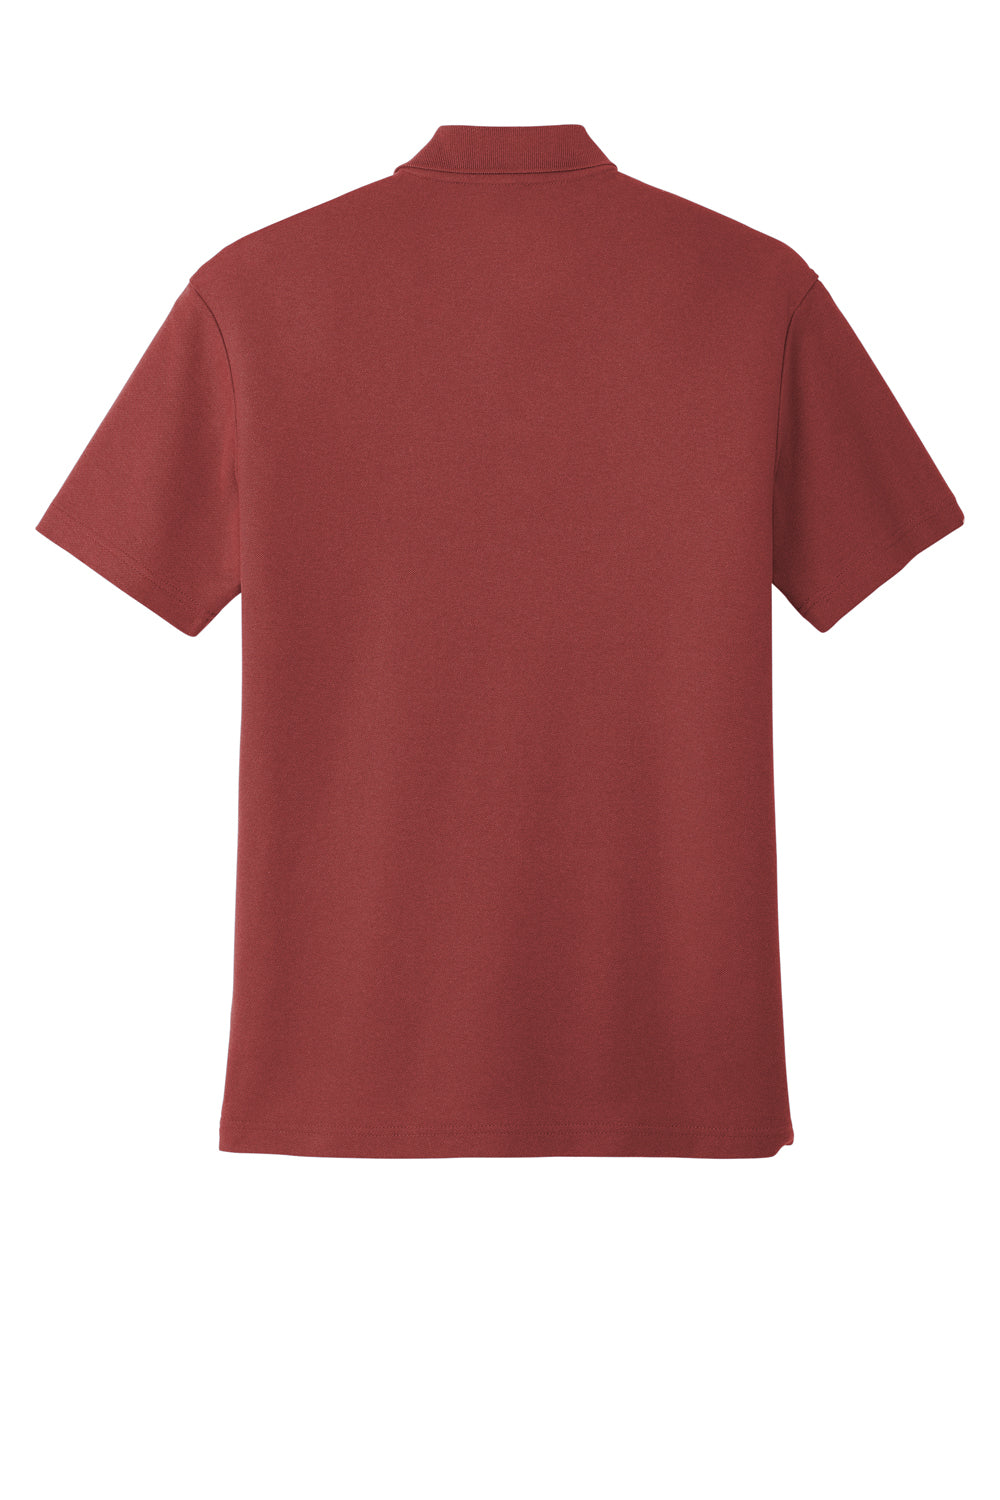 Port Authority K867 Mens C-FREE Pique Short Sleeve Polo Shirt Garnet Red Flat Back